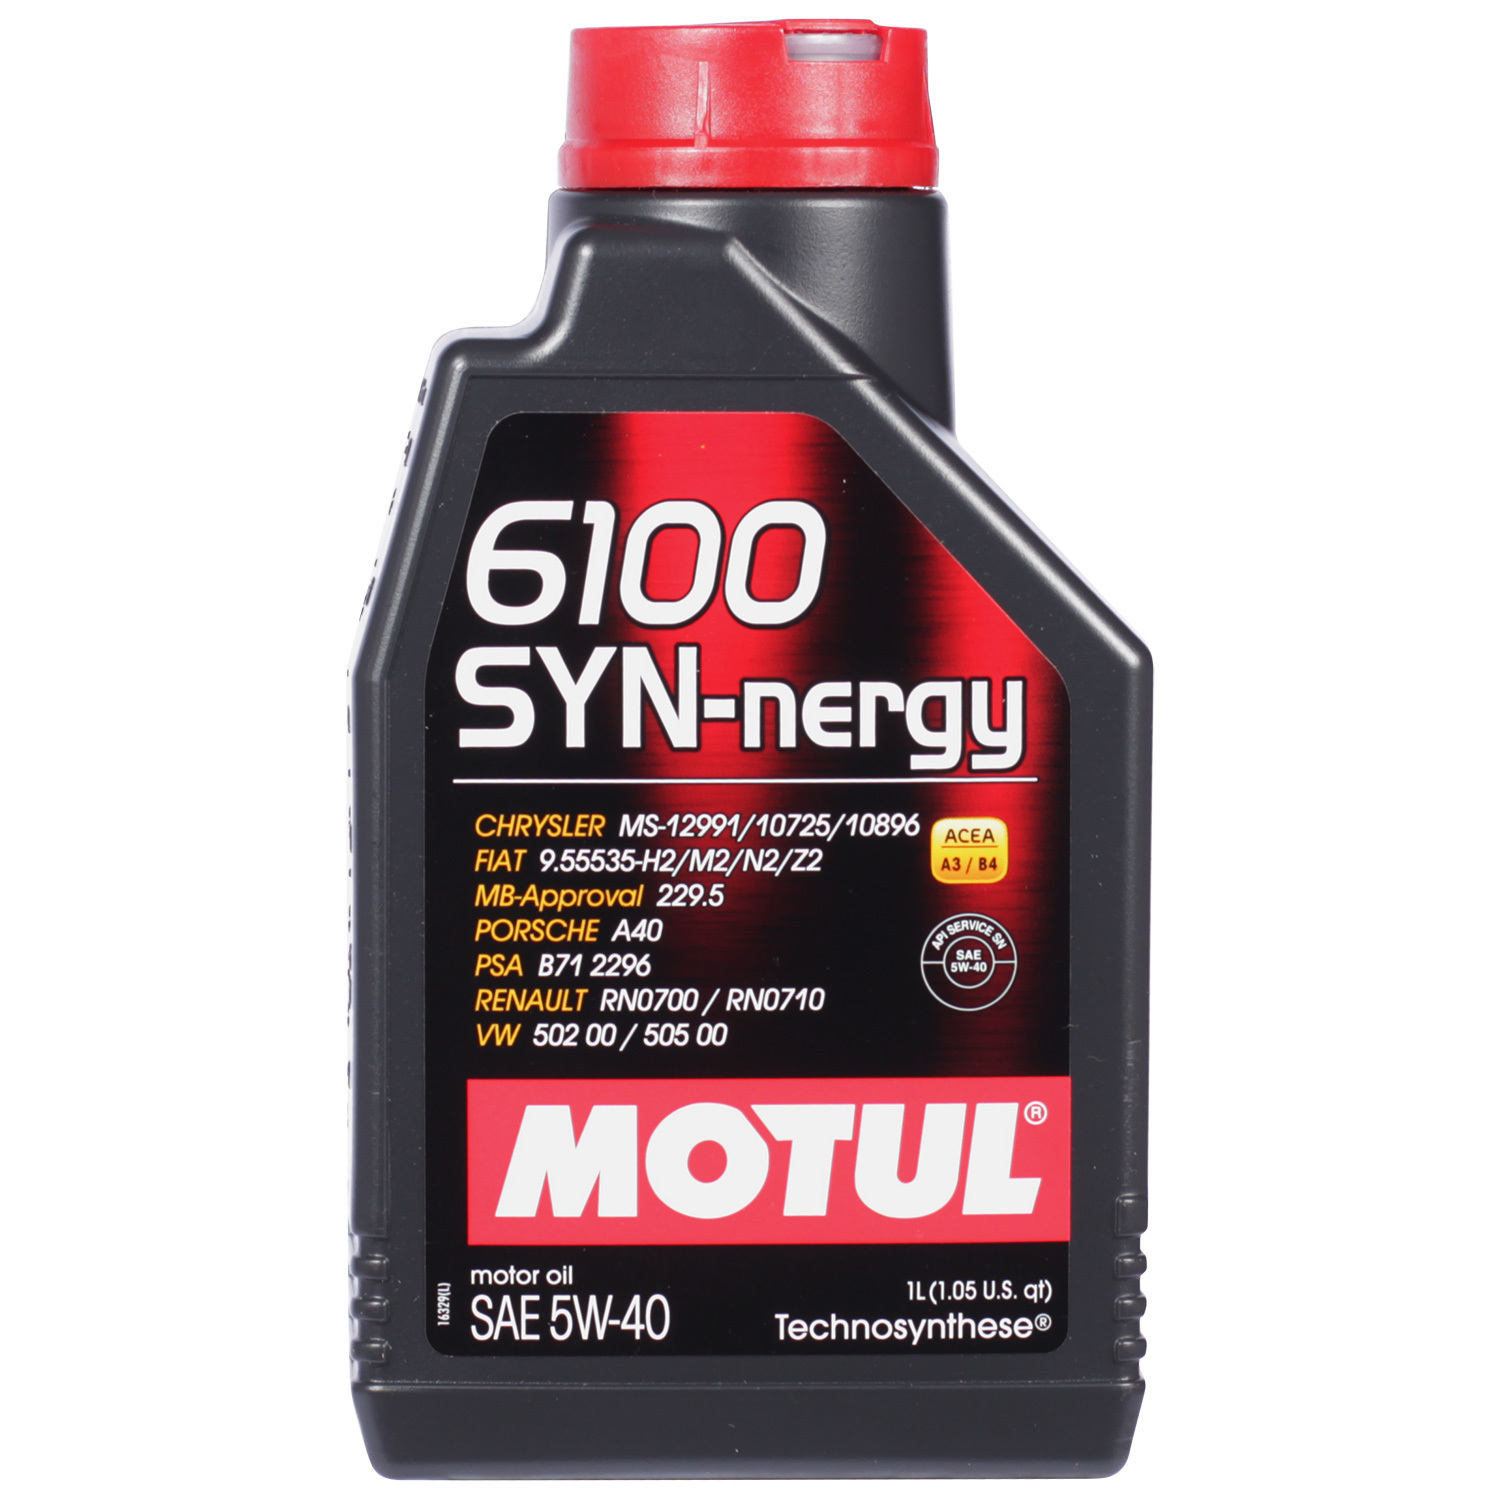 Motul Моторное масло Motul 6100 SYN-NERGY 5W-40, 1 л масло моторное motul 6100 syn clean 5w 30 синтетическое 1 л